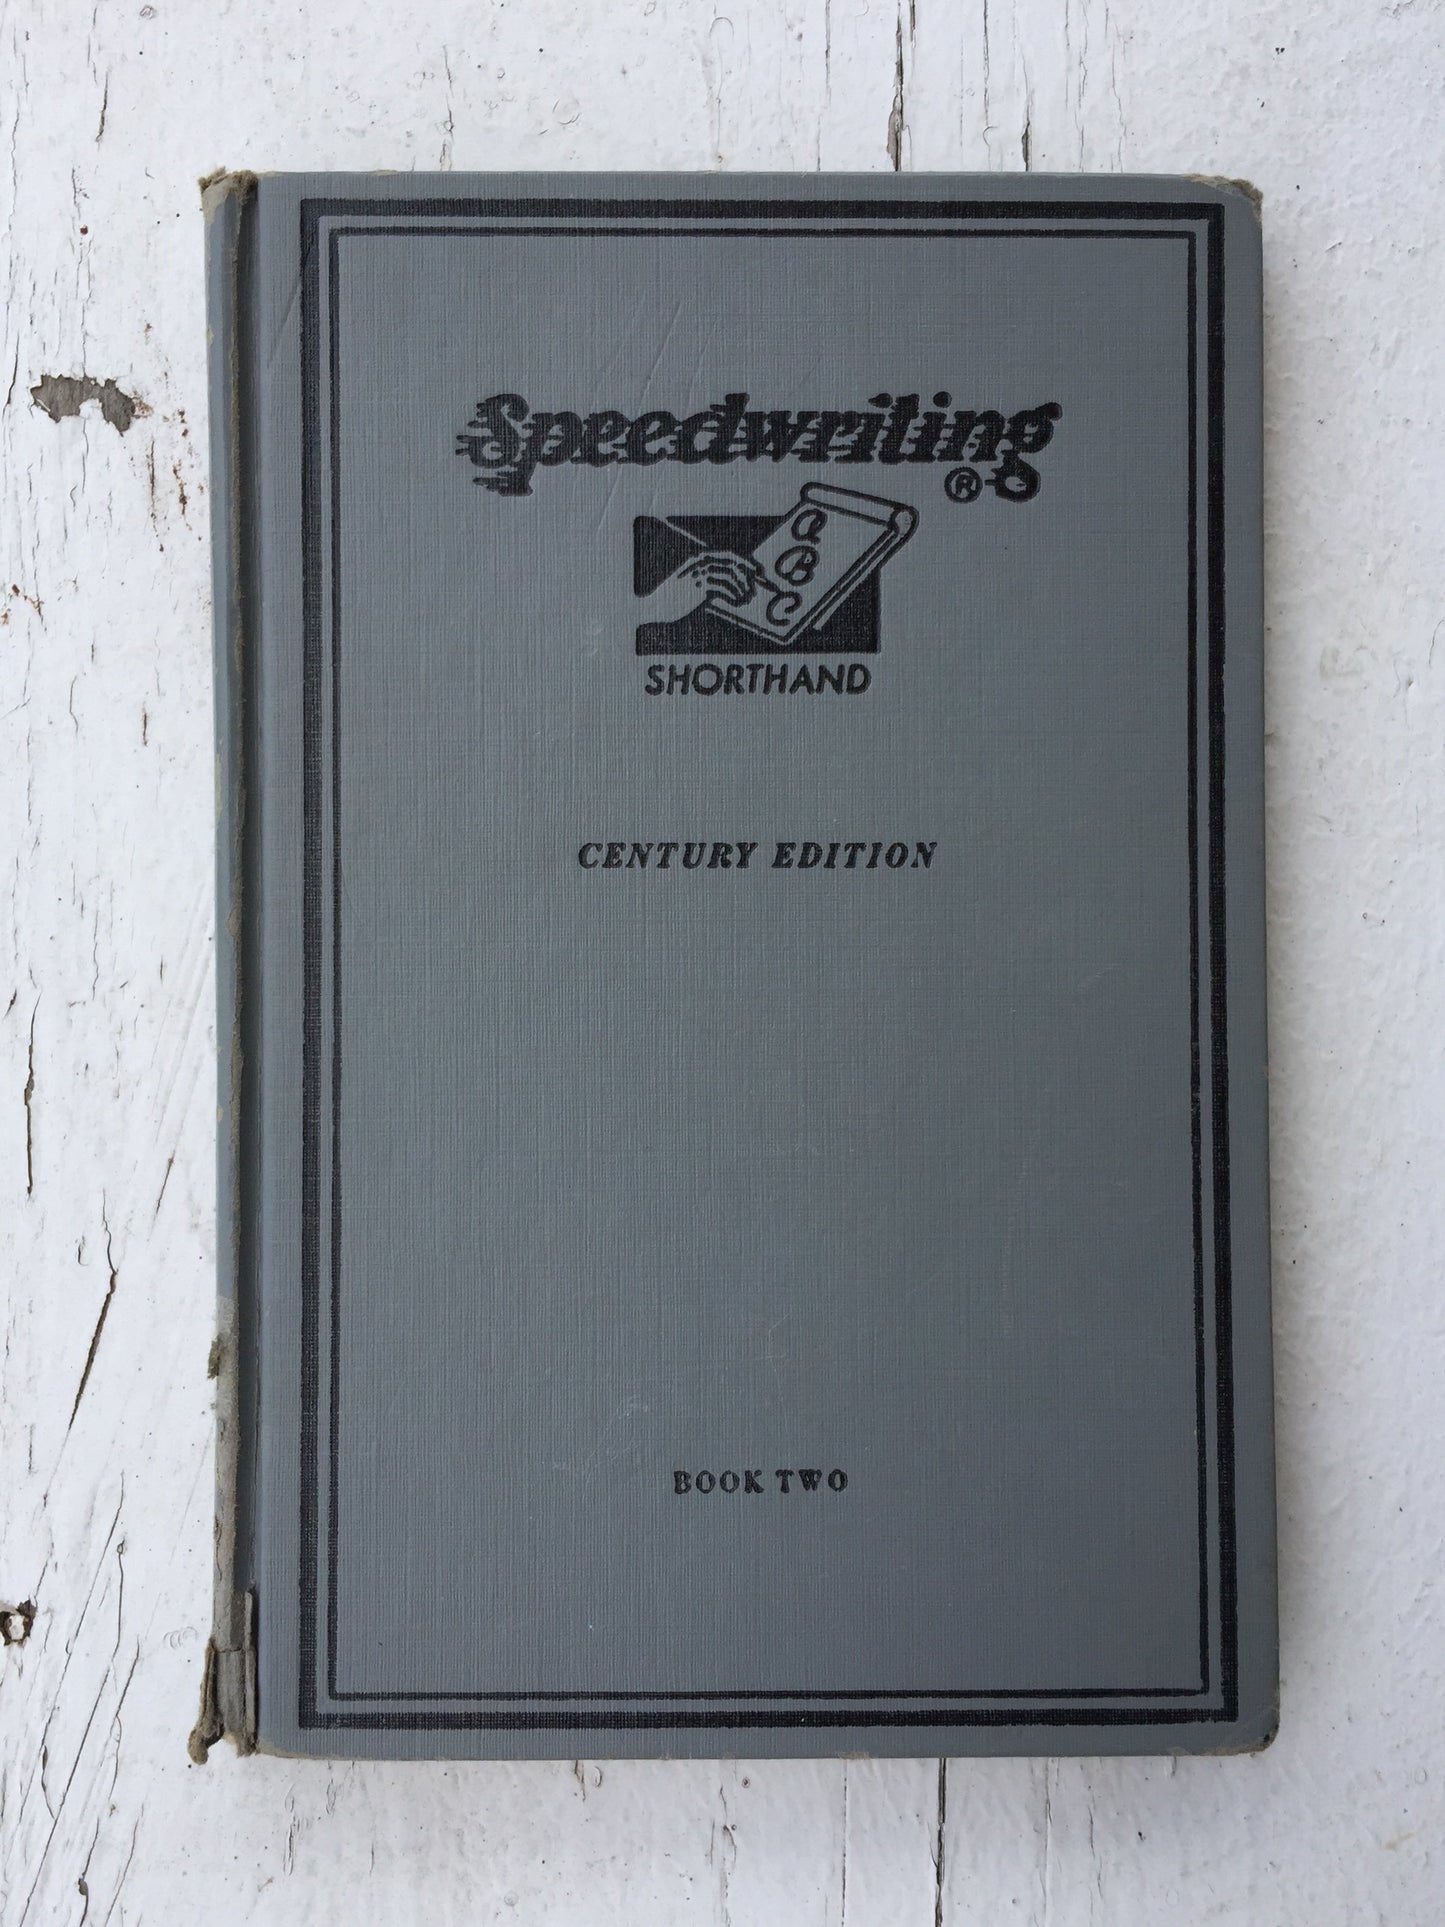 Vintage Speedwriting Books-Vintage Finds-Quinn's Mercantile